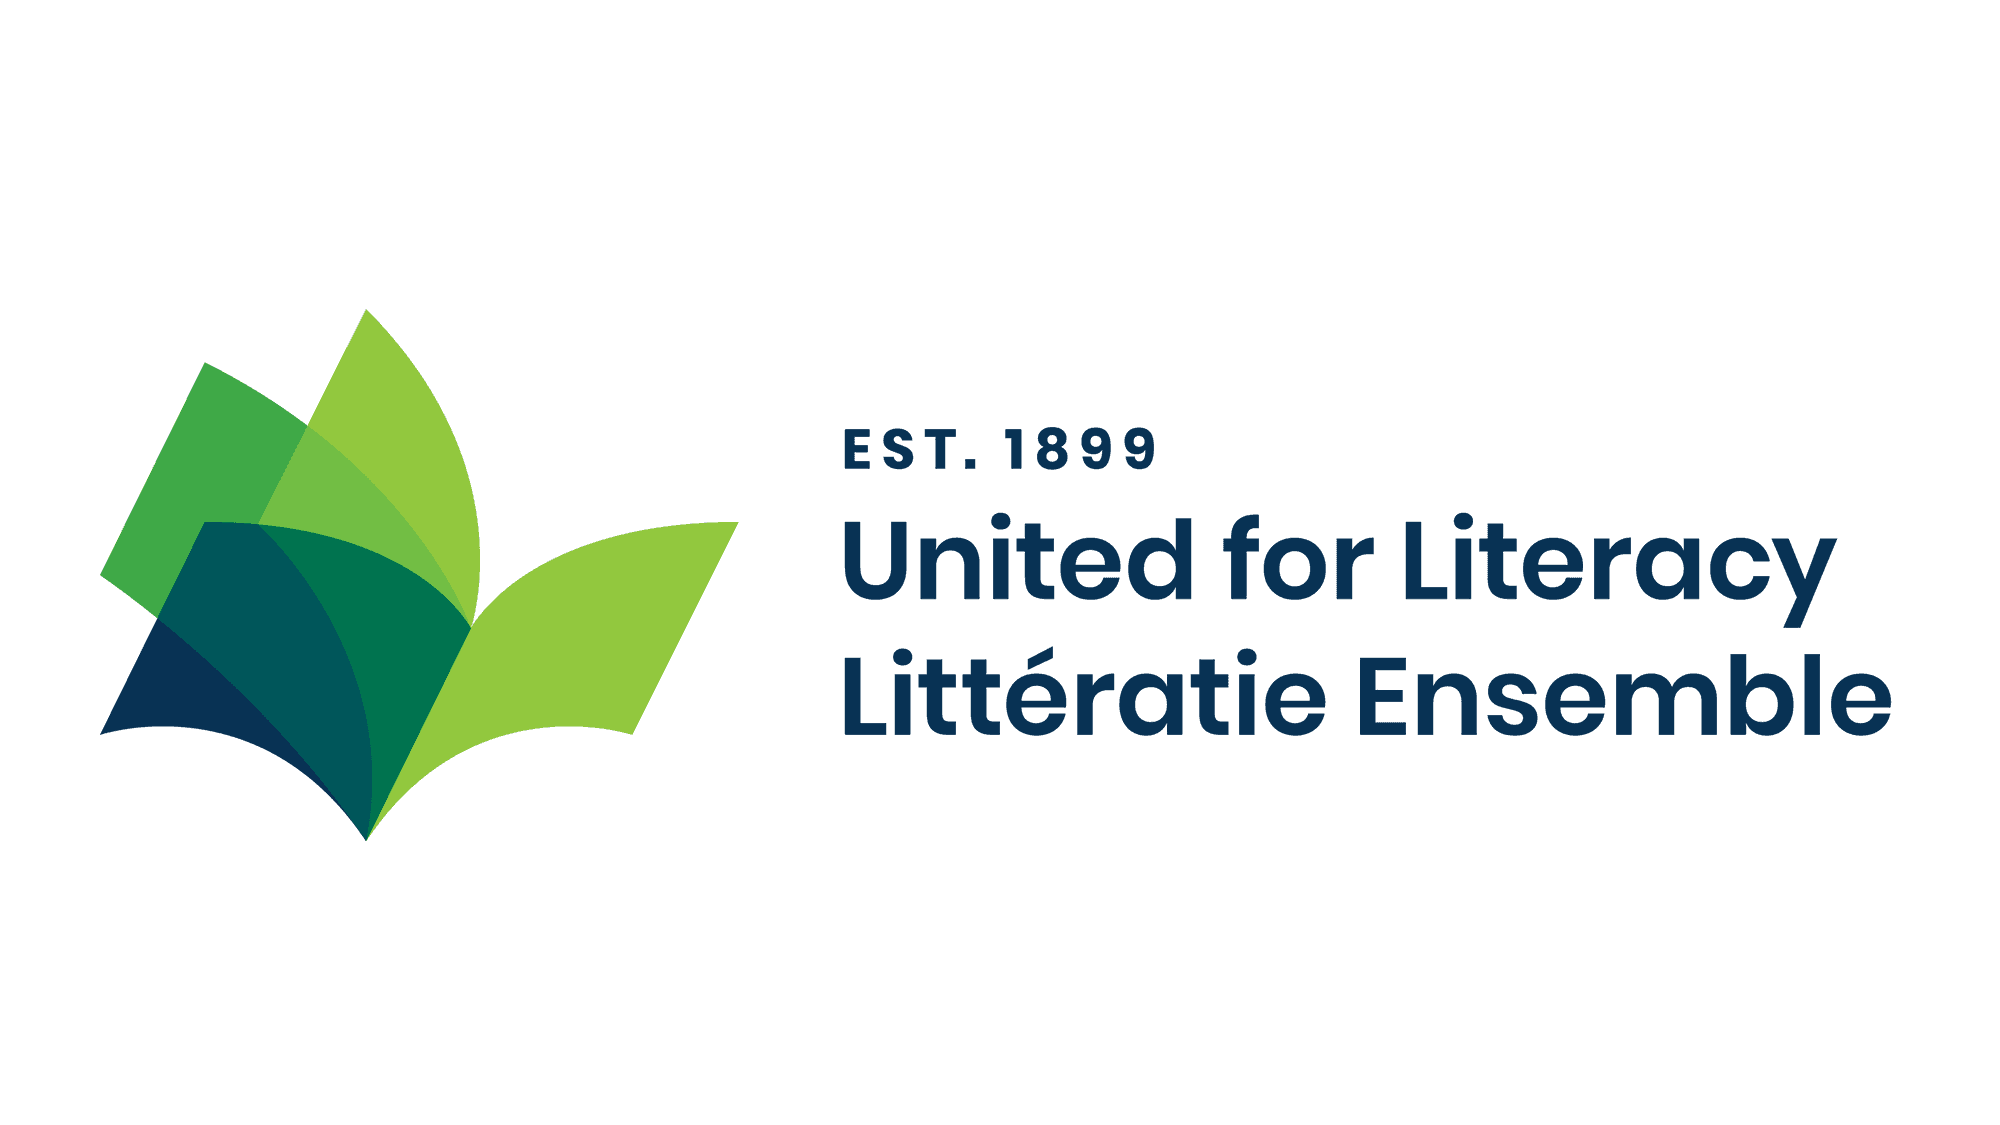 United for Literacy's Logo